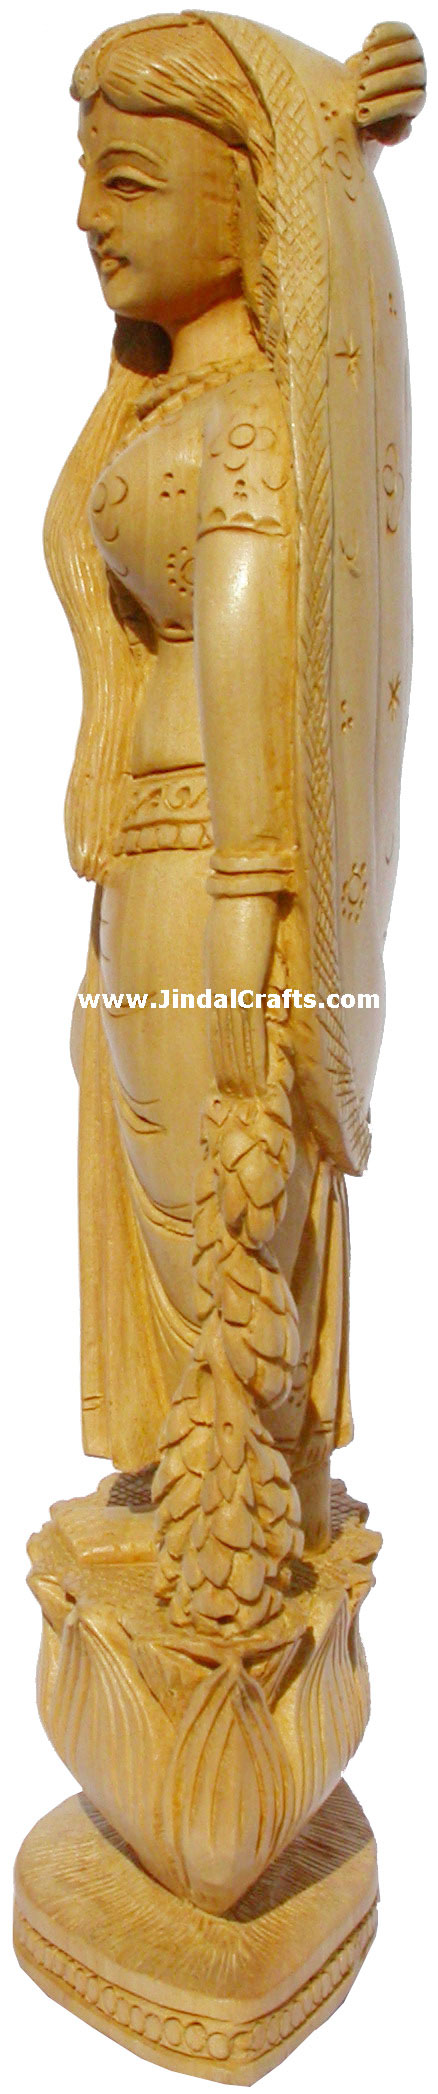 Wood Sculpture Indian Village Lady figurine India Art